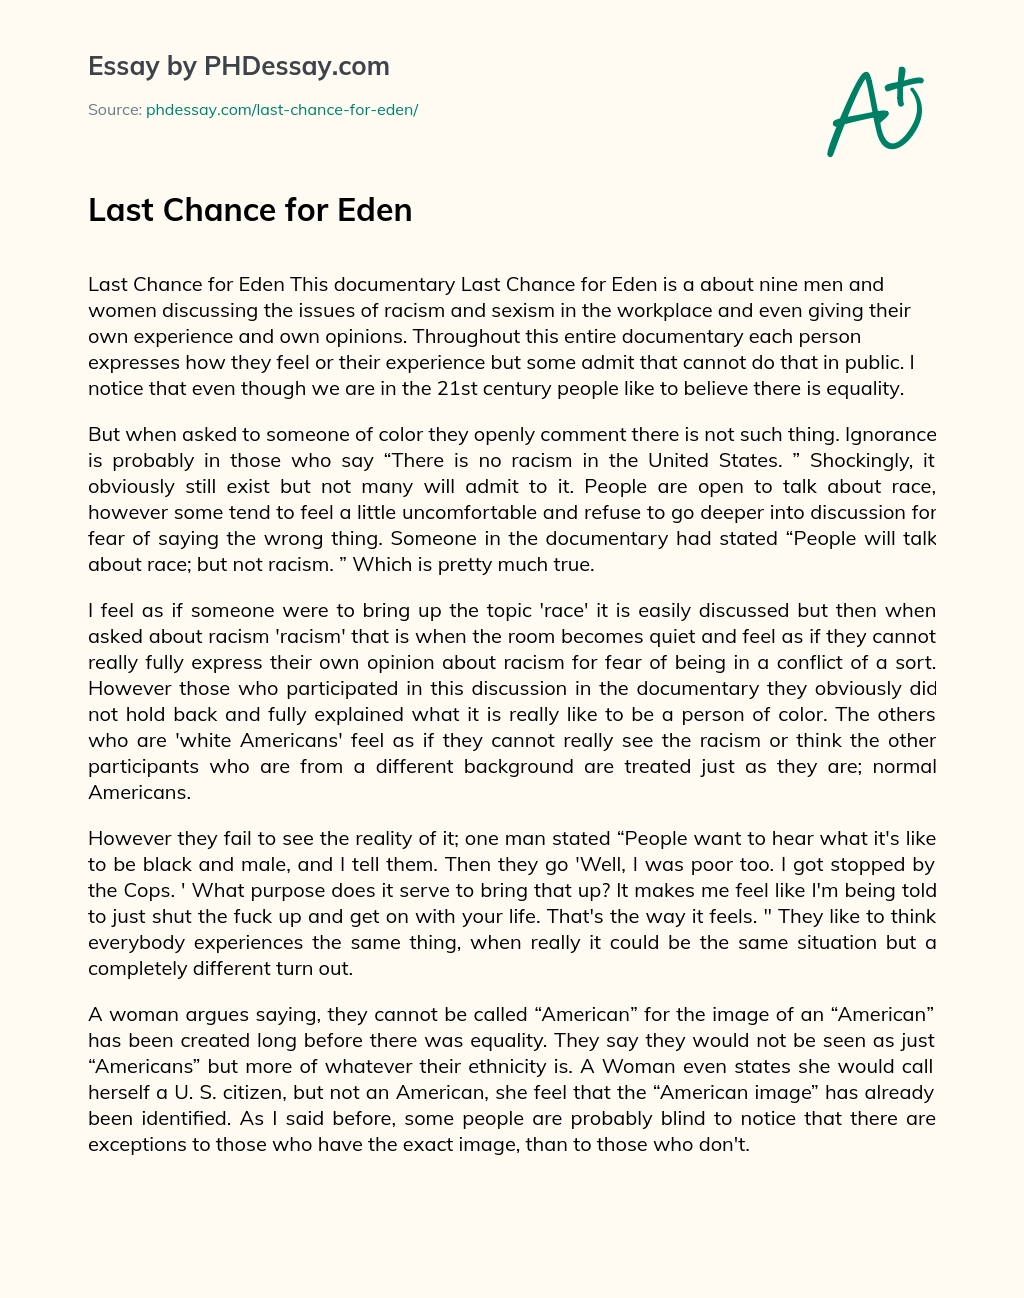 Last Chance for Eden essay